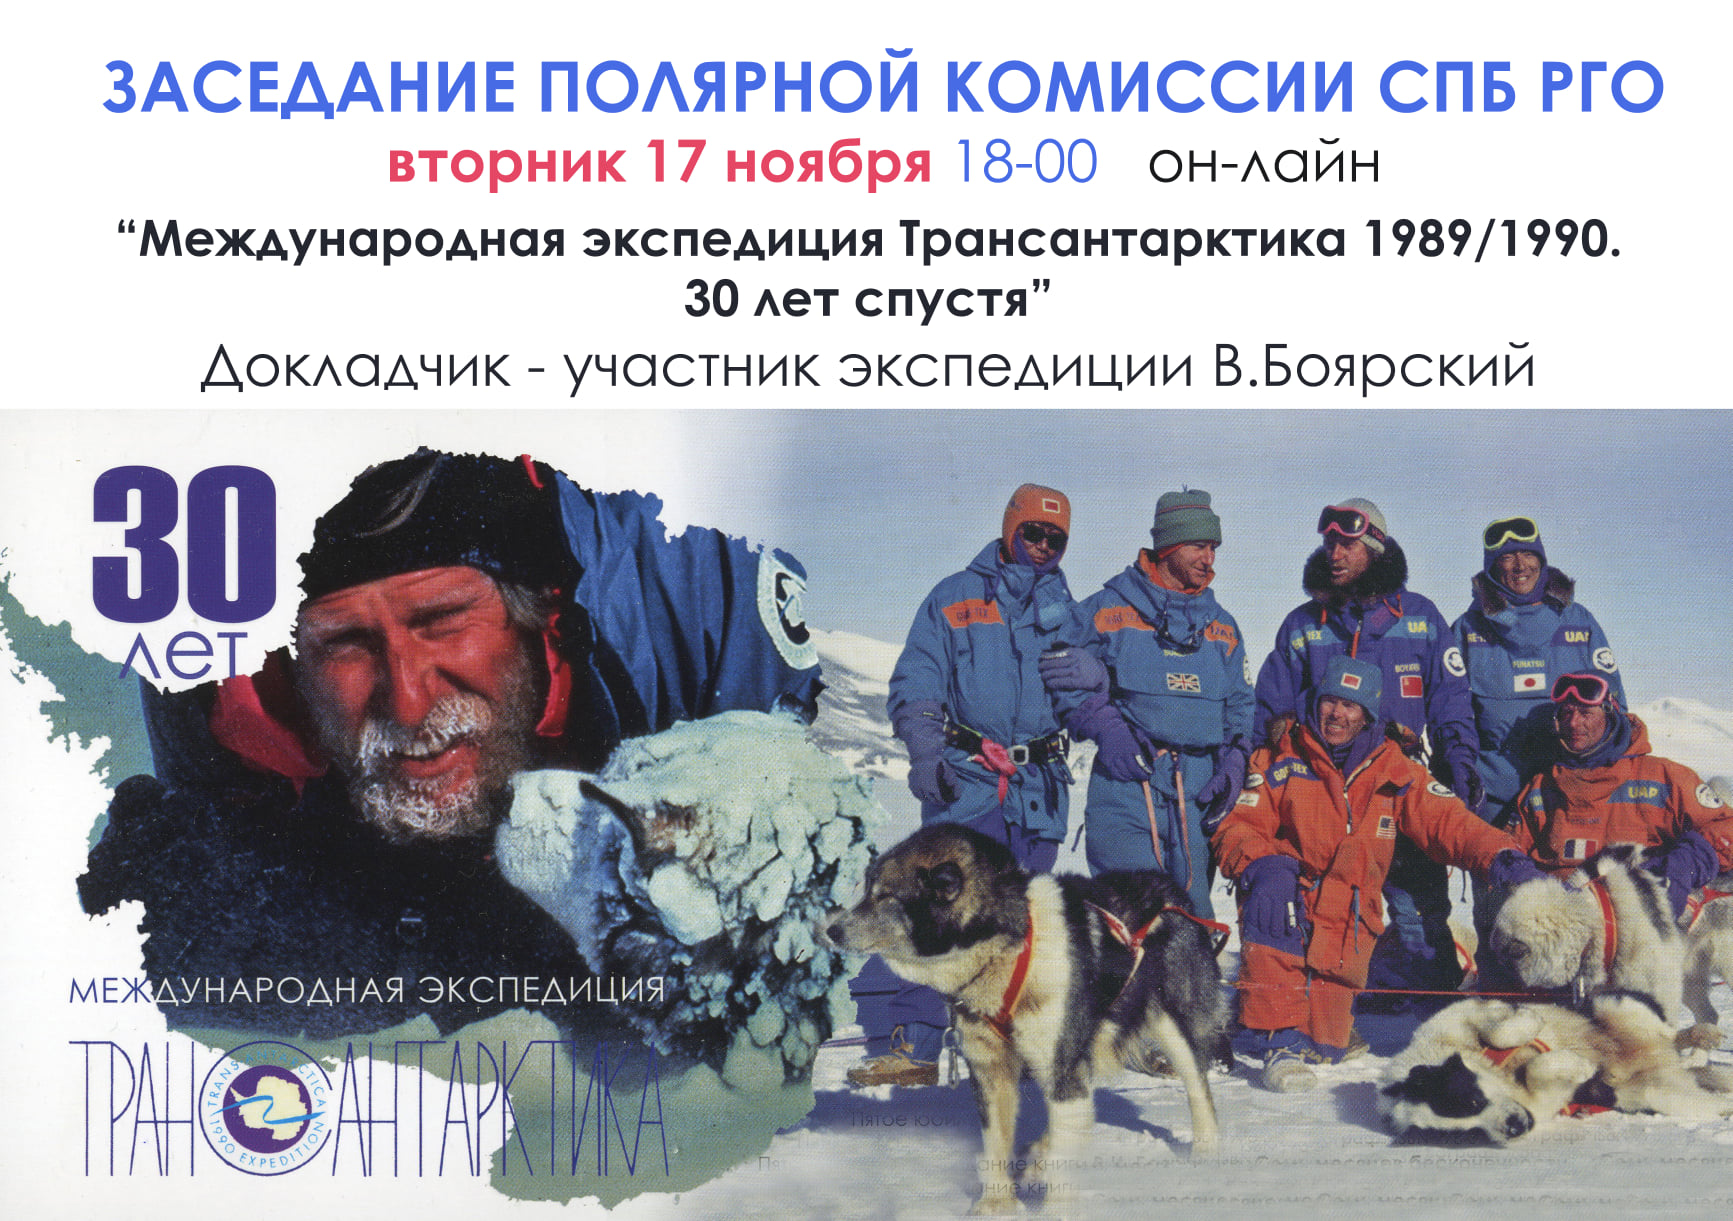 Трансантарктика 1989-1990 30 лет спустя - 125165495_102.jpg